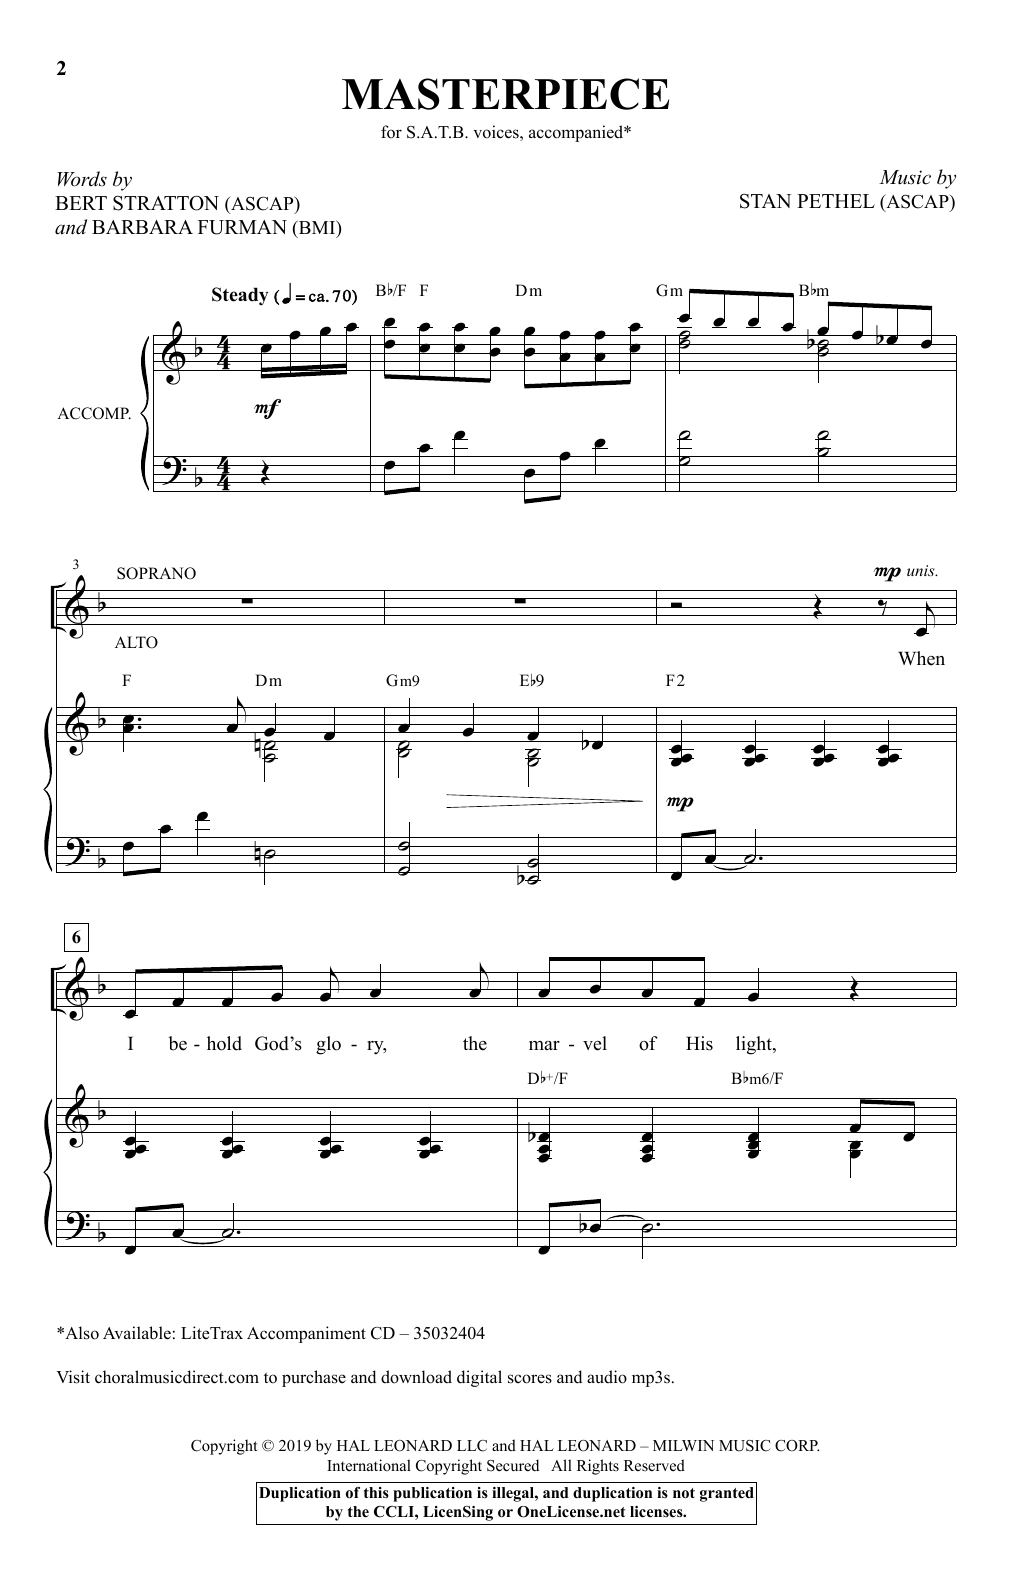 Stan Pethel Masterpiece Sheet Music Notes & Chords for SATB Choir - Download or Print PDF